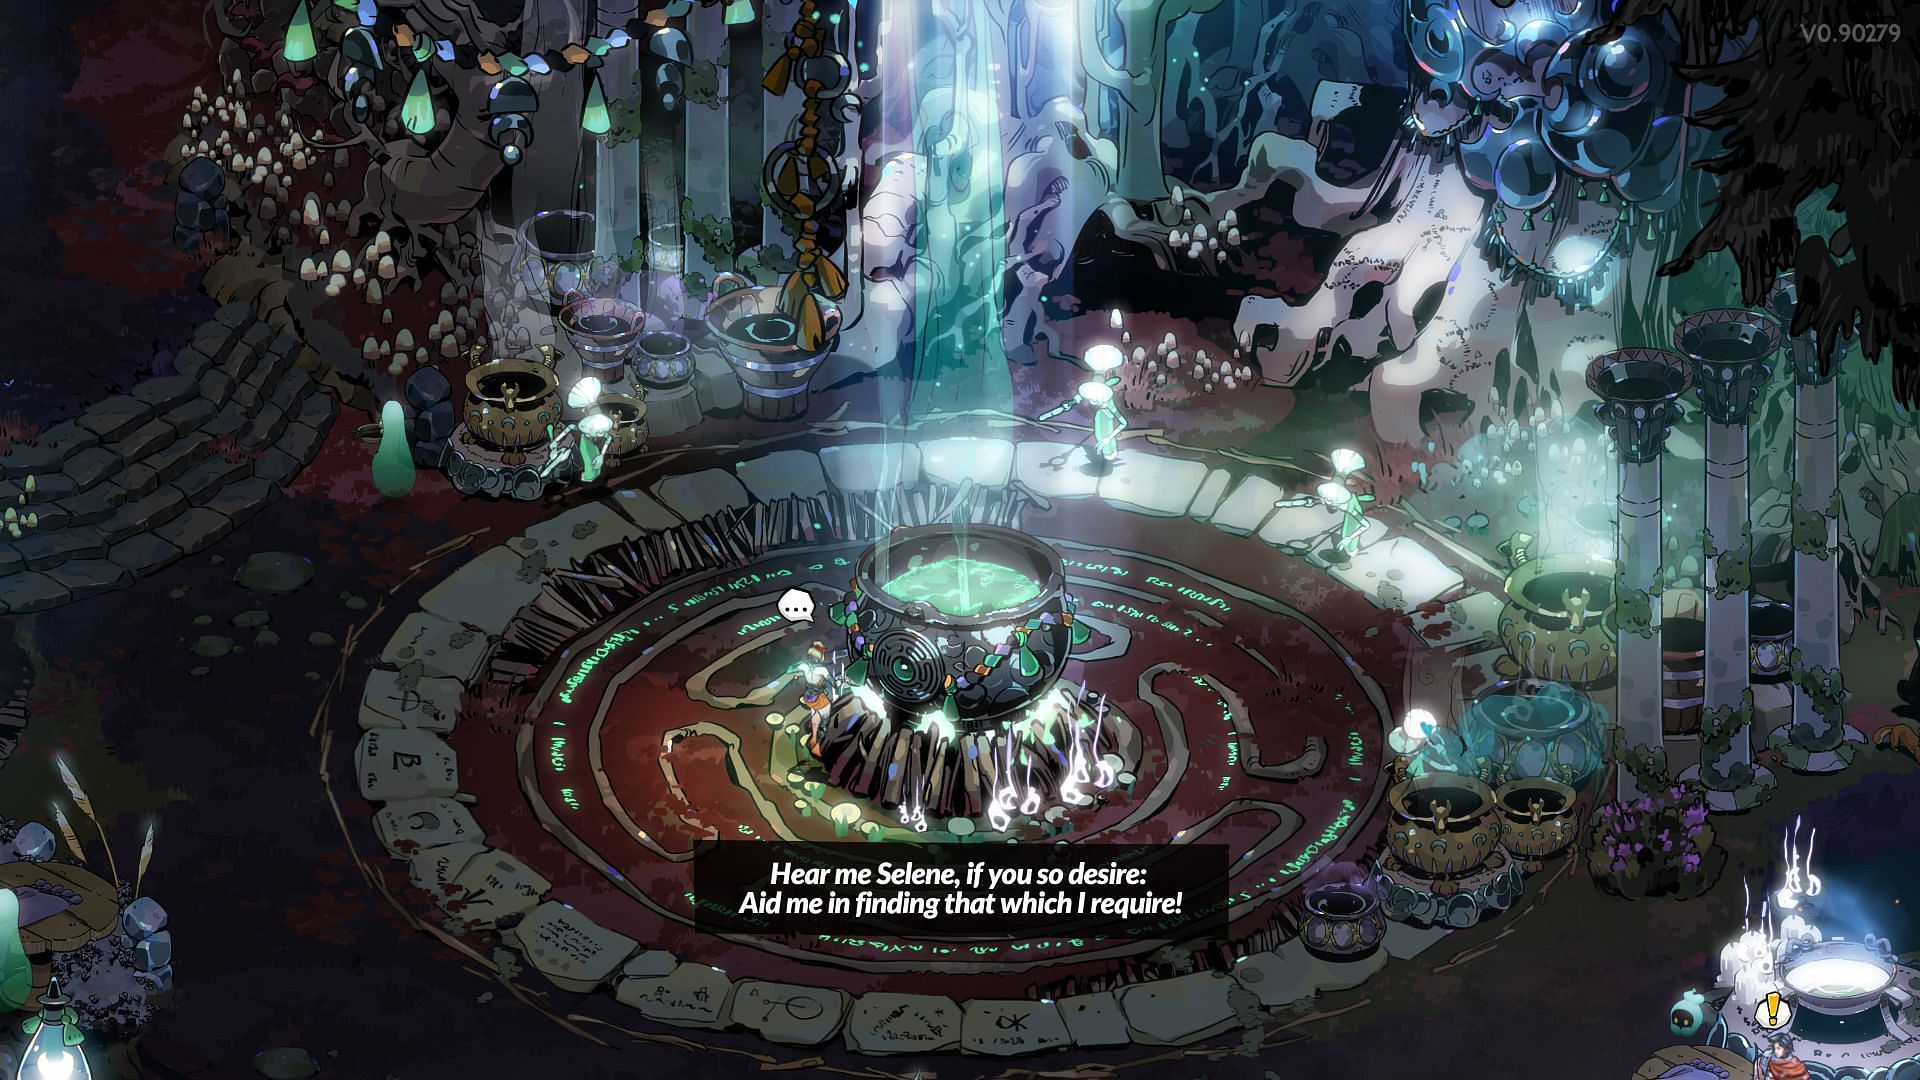 Incantation at the Cauldron in the Crossroads (Image via Sportskeeda || Supergiant Games)